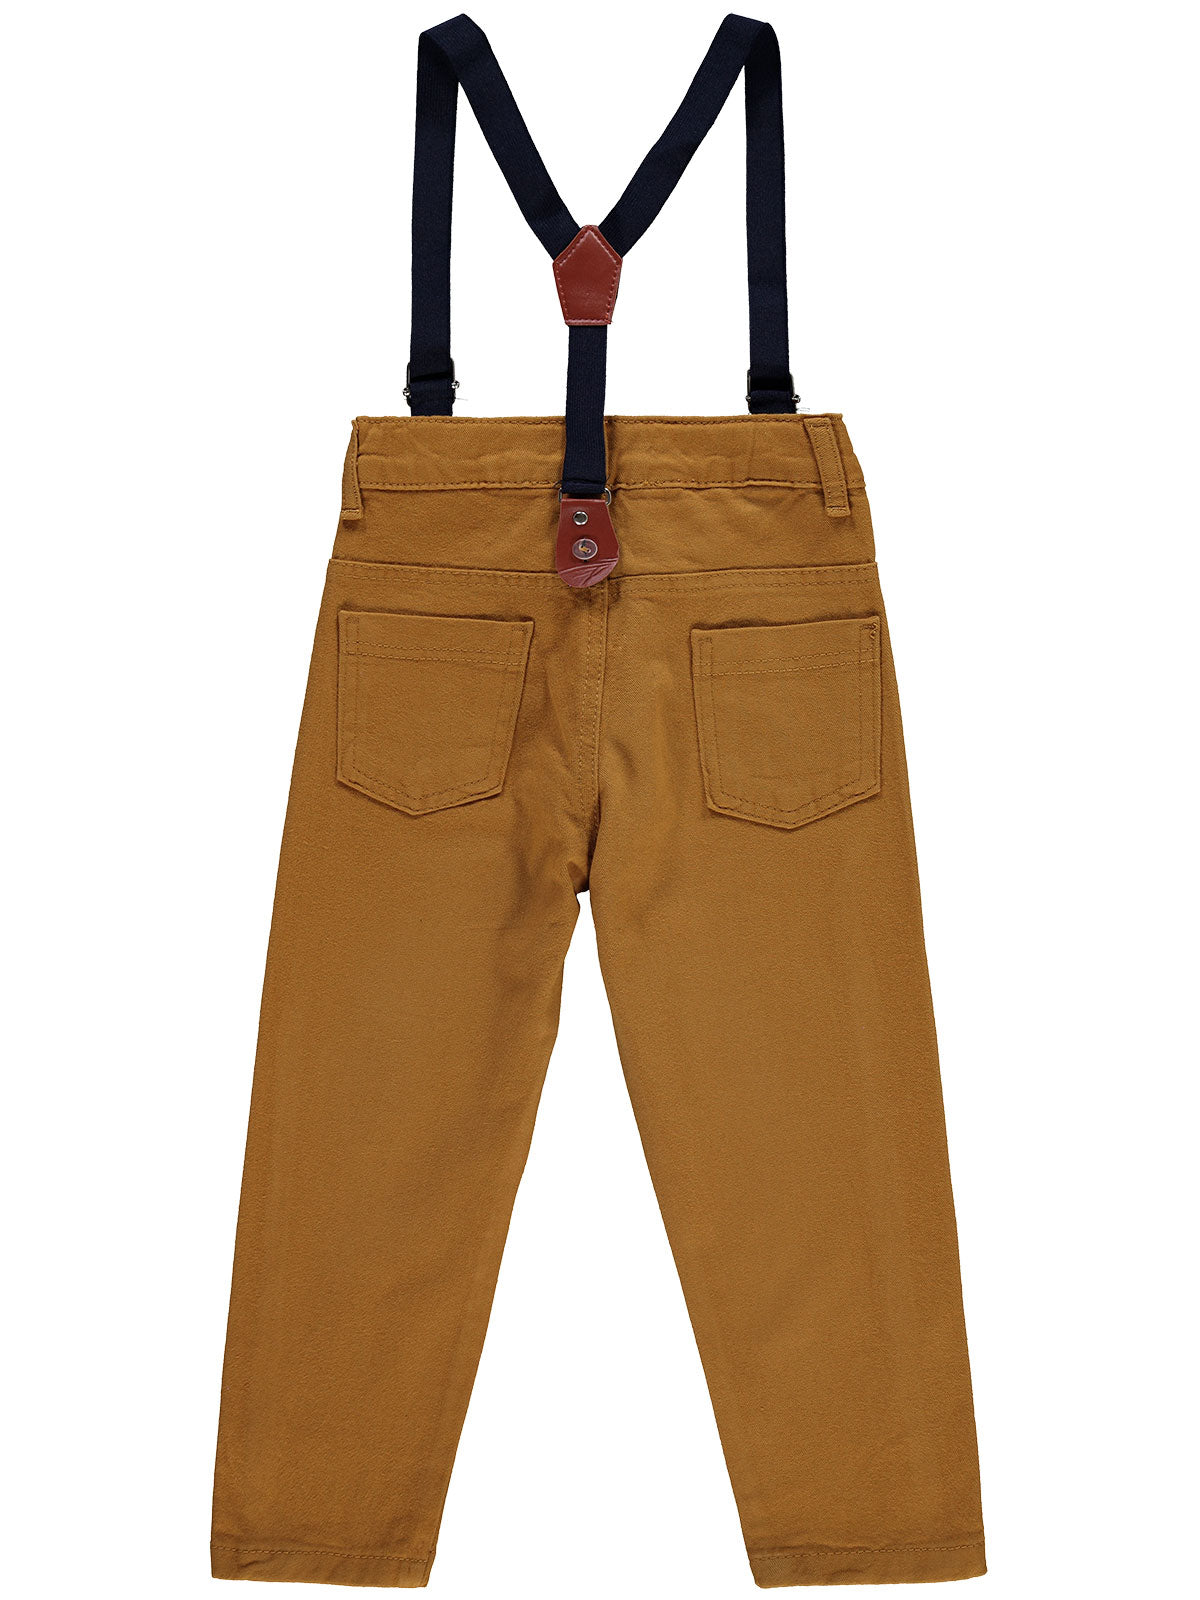 Pantaloni cu bretele Strap Style mustar